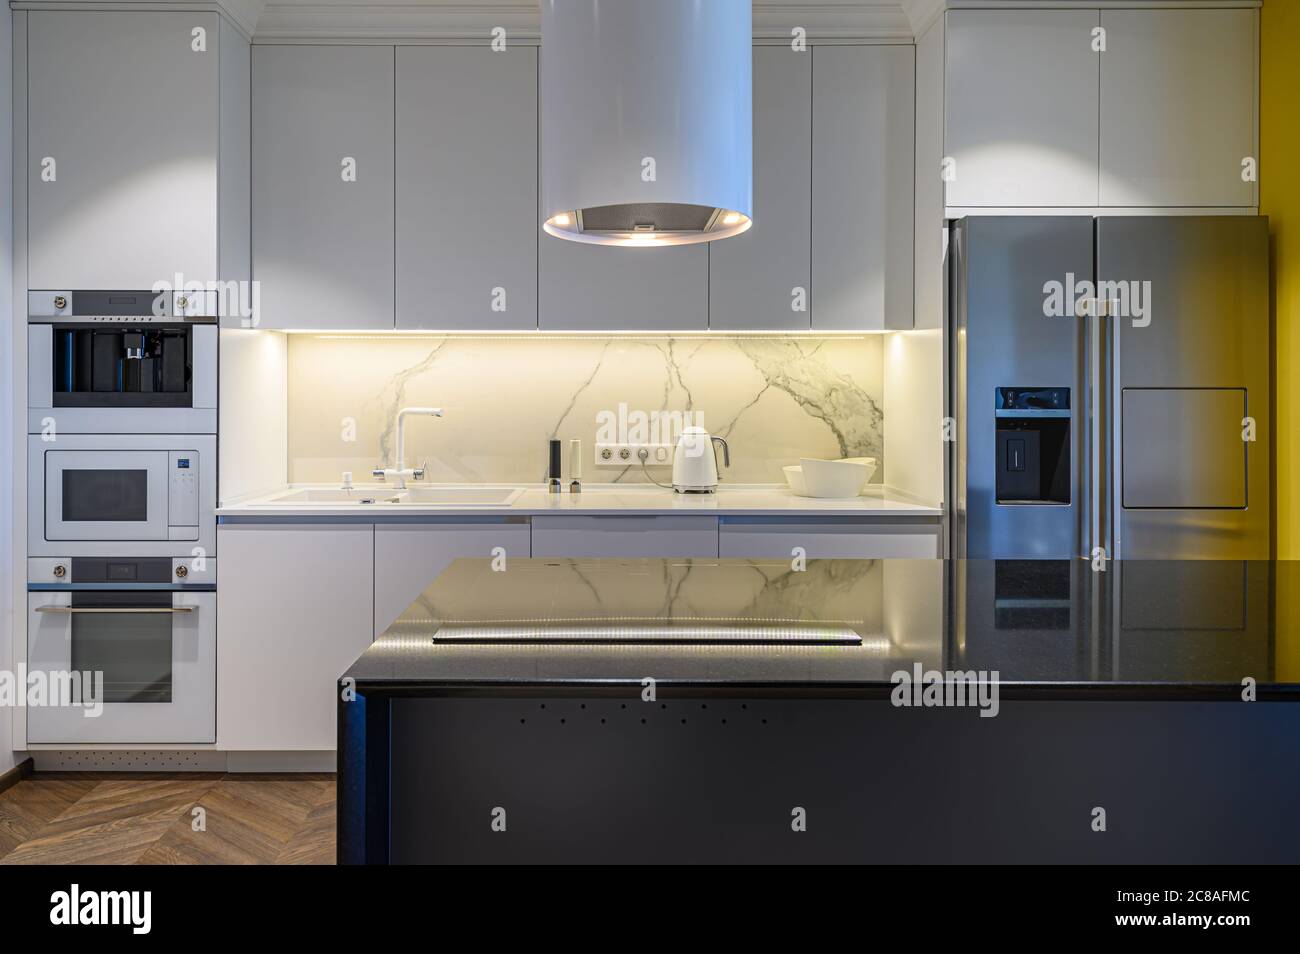 https://c8.alamy.com/comp/2C8AFMC/luxury-kitchen-interior-with-minimalism-design-2C8AFMC.jpg